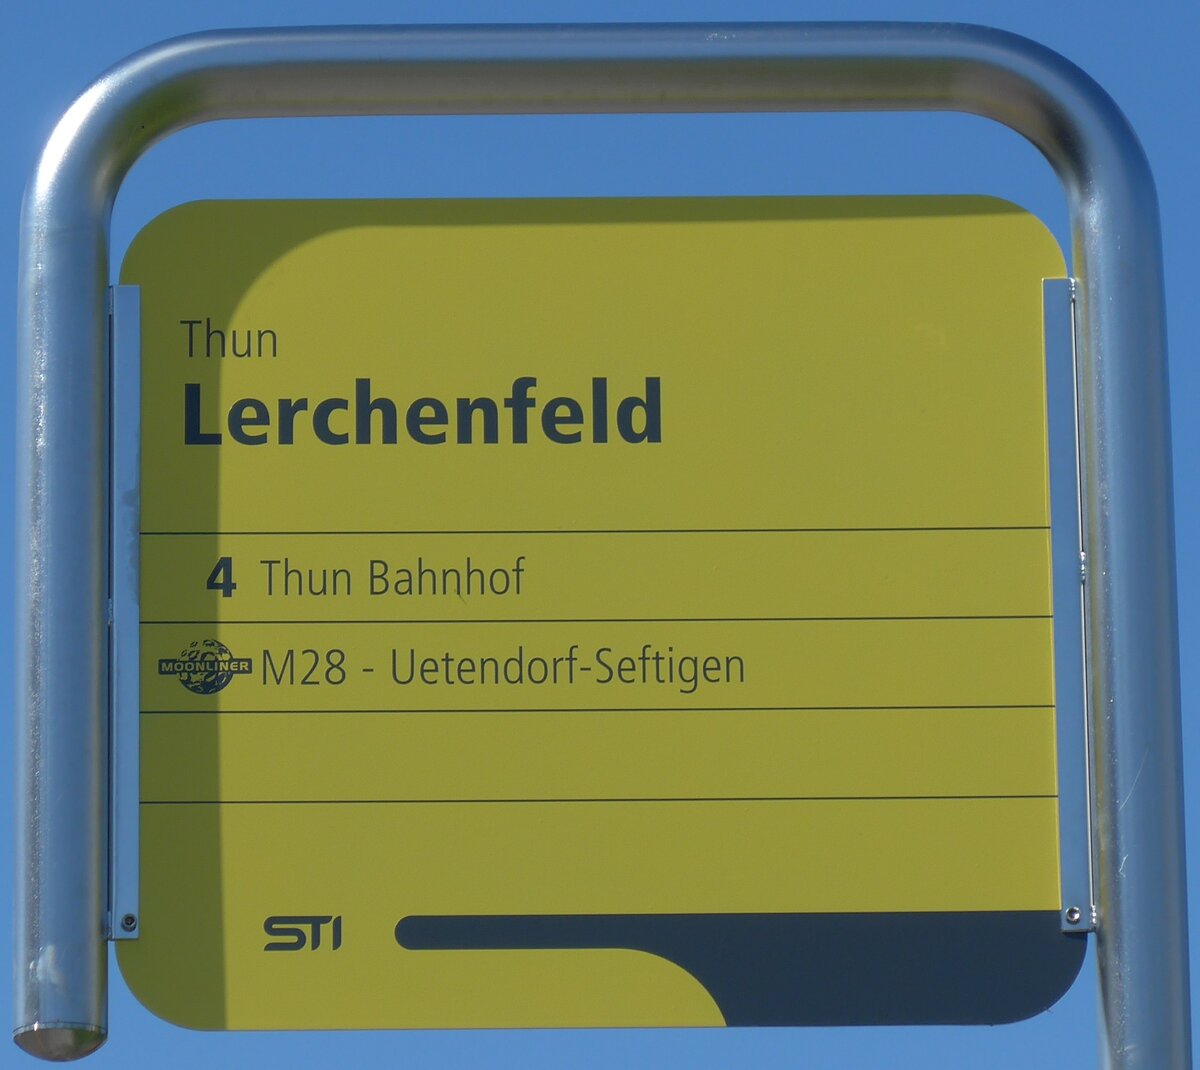 (155'267) - STI-Haltestellenschild - Thun, Lerchenfeld - am 14. September 2014